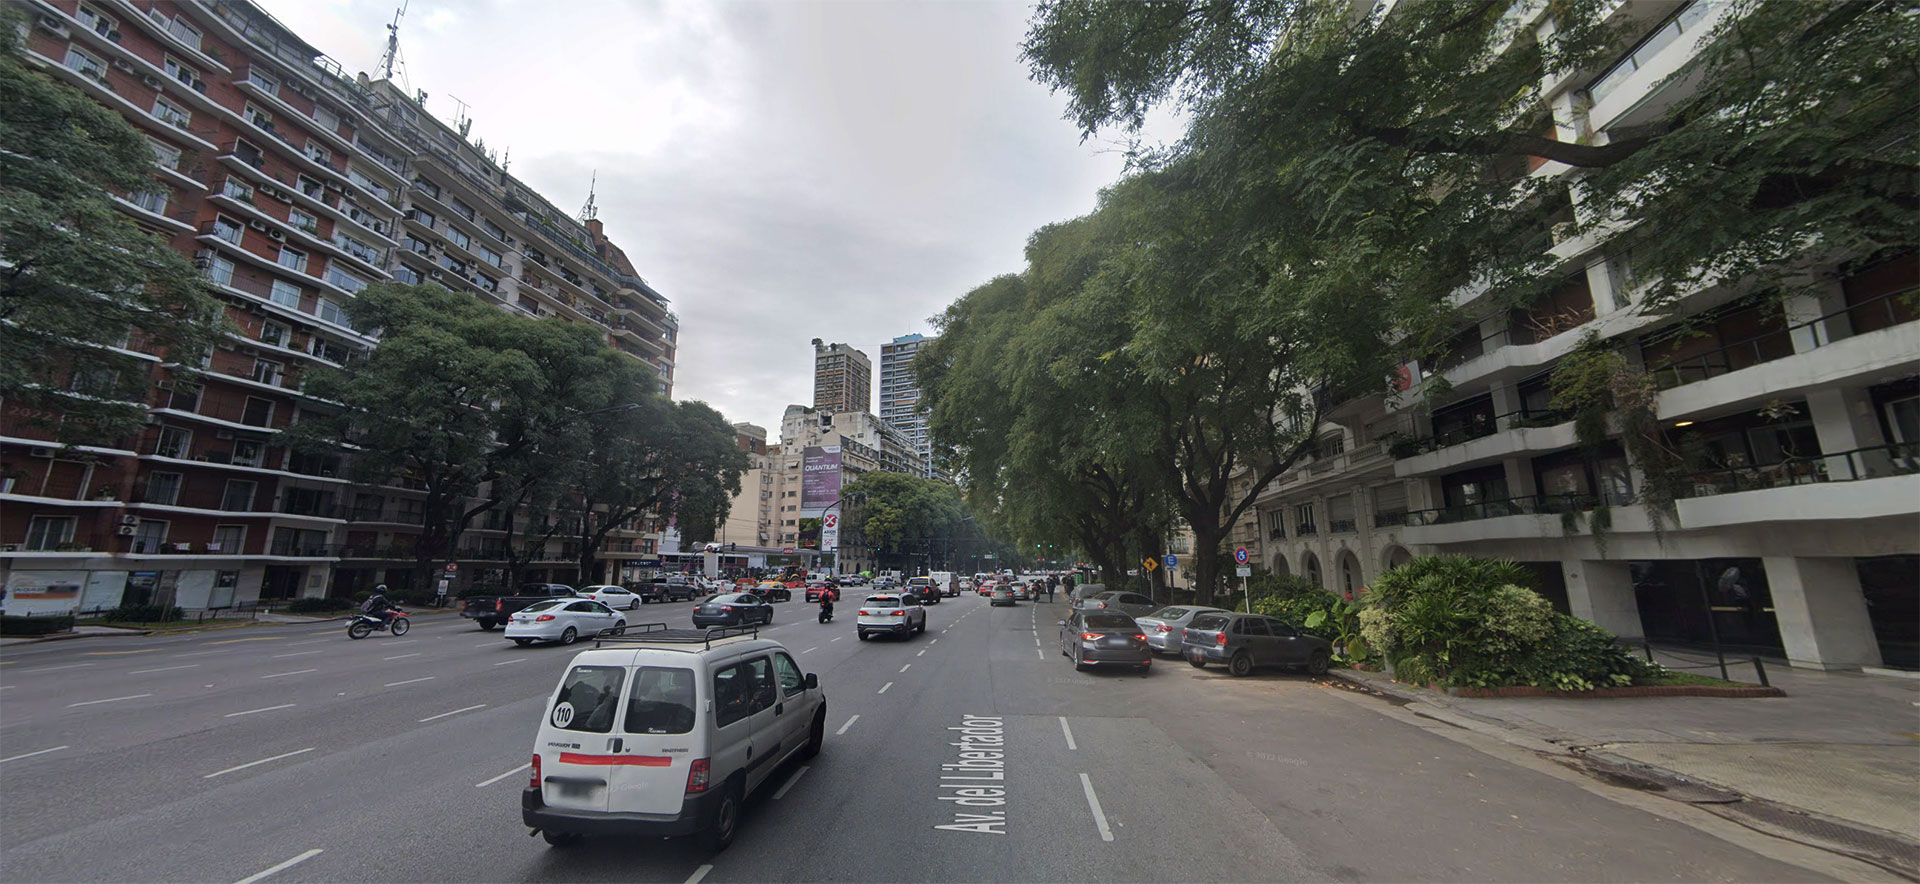 Avenida del Libertador between Salguero and Cavia, a highly valued area of ​​Palermo